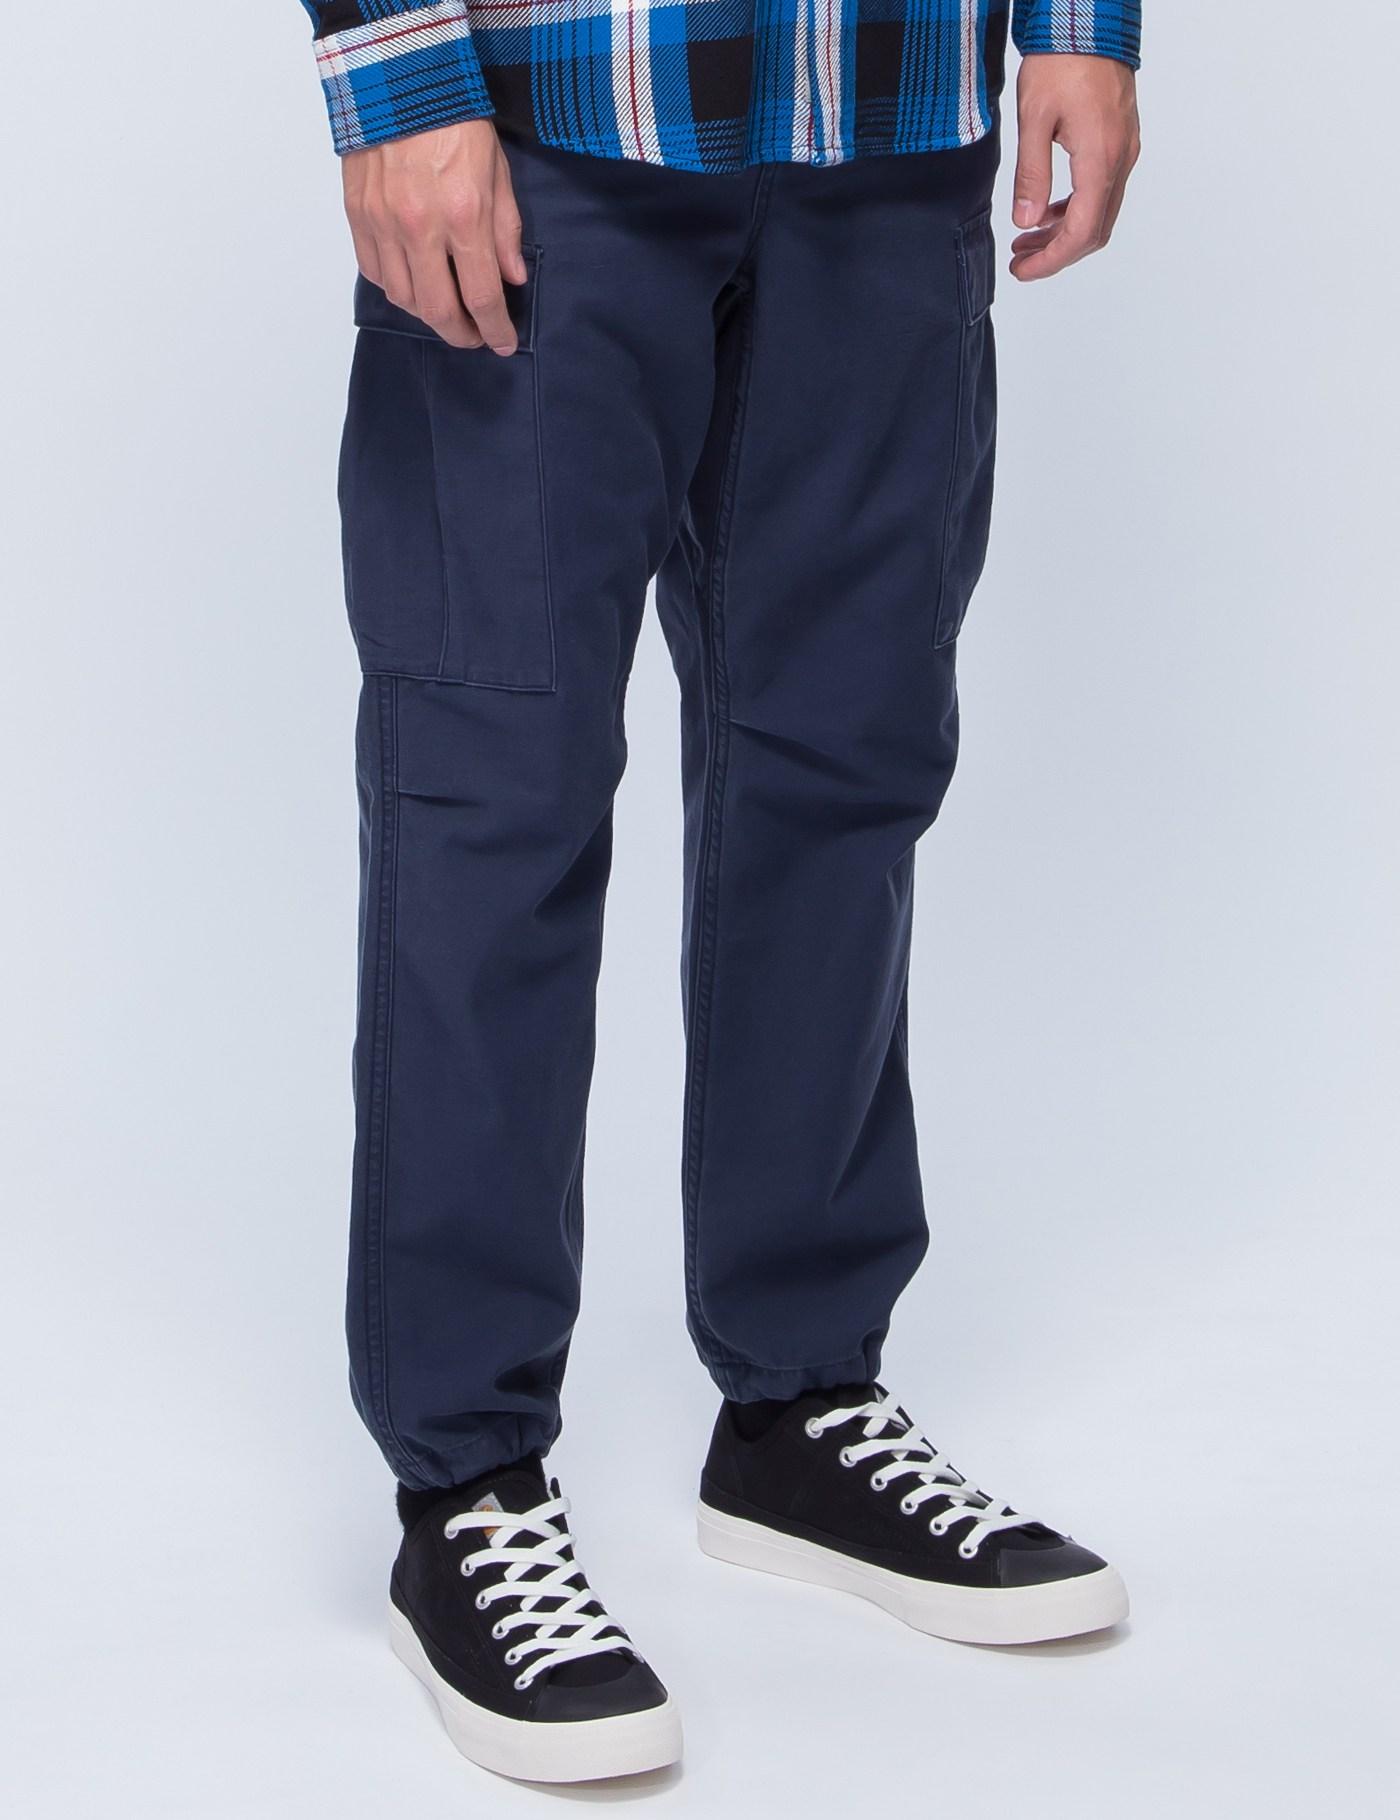 Carhartt WIP Cotton Camper Pants in Blue for Men - Lyst